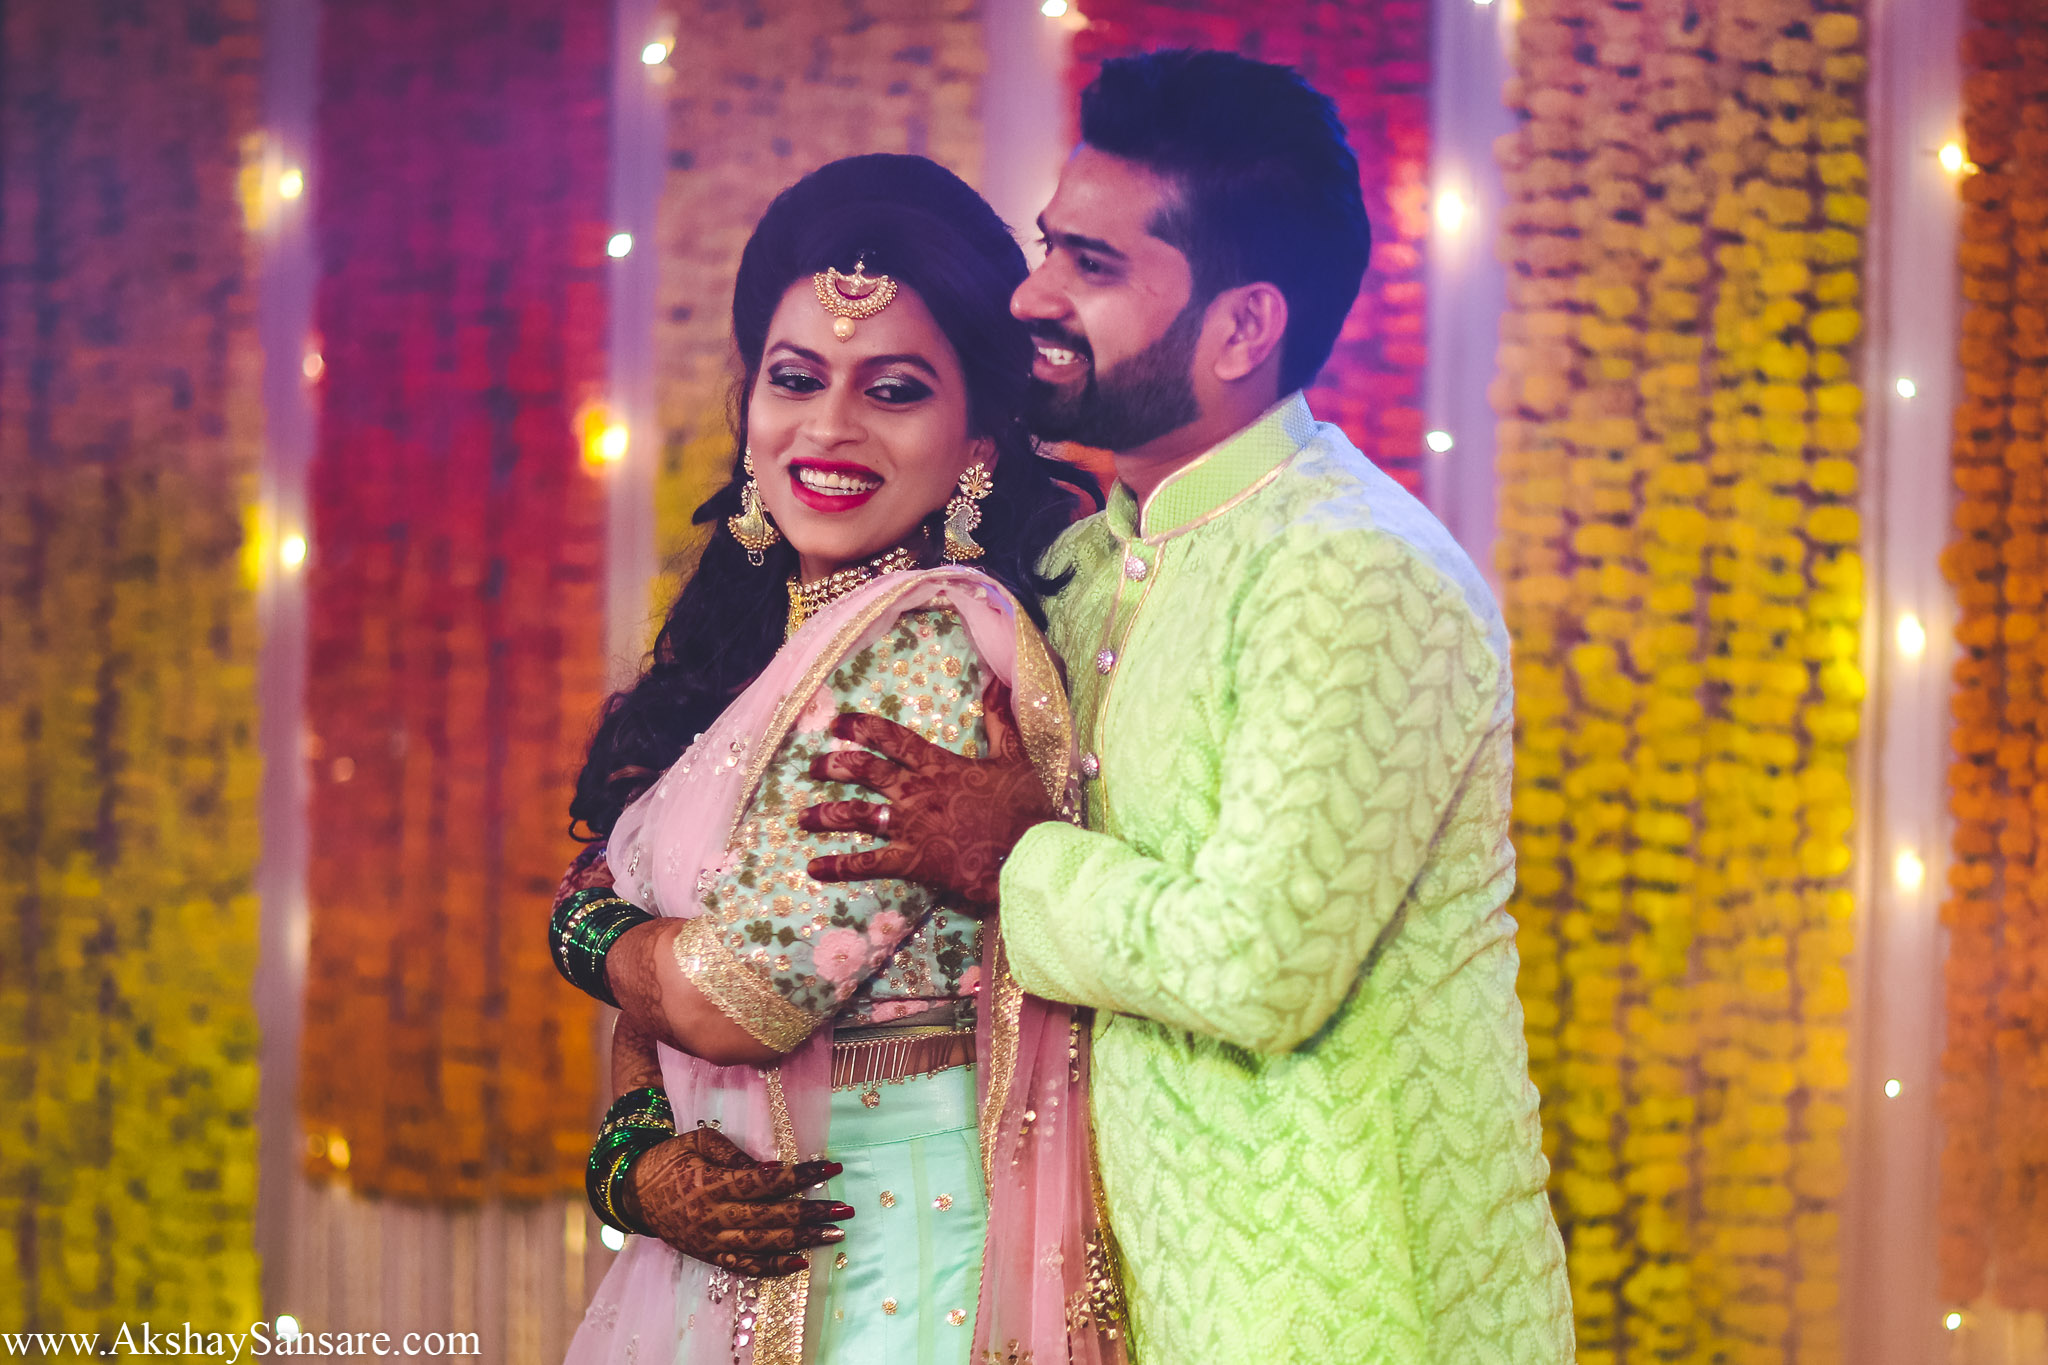 Ajay & Devika Akshay Sansare Photography Best Candid wedding photographer in mumbai india37.jpg